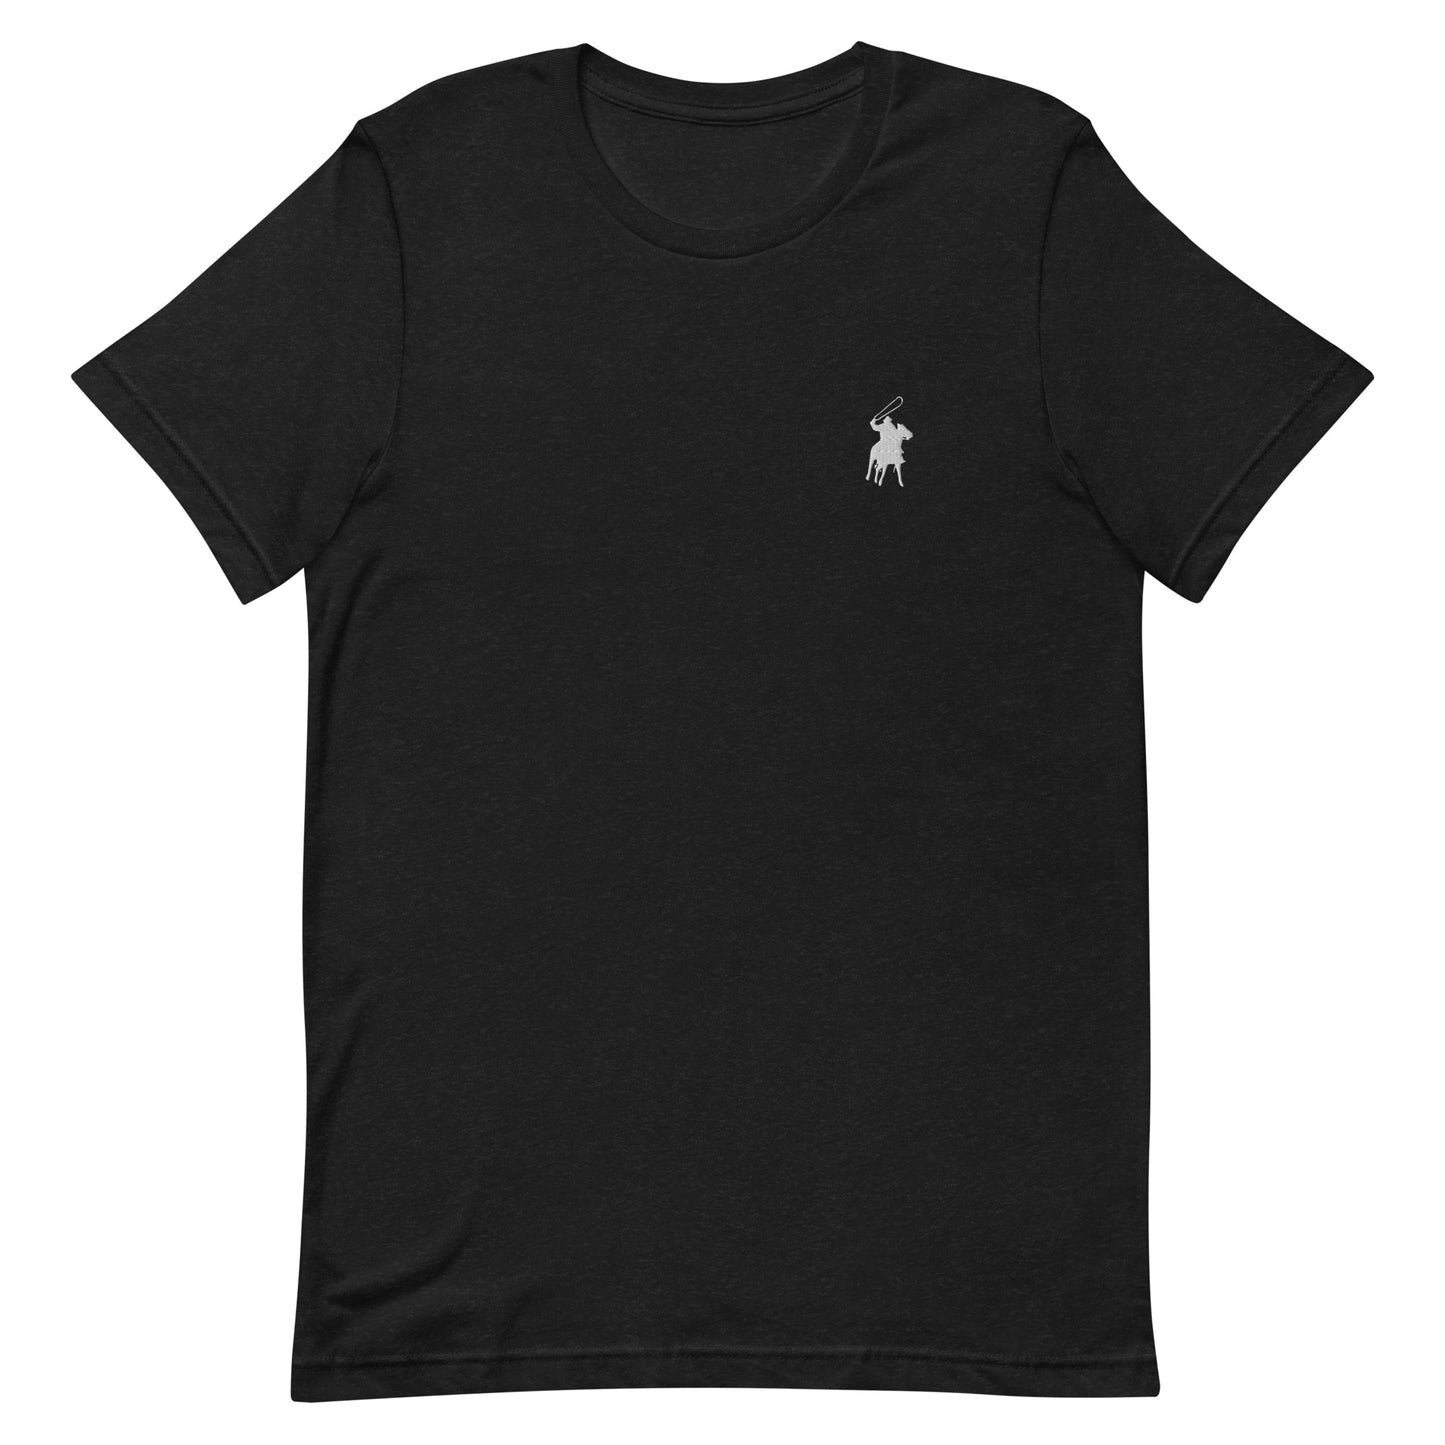 Country Polo Tee (Grey logo on Black Heather T-shirt)